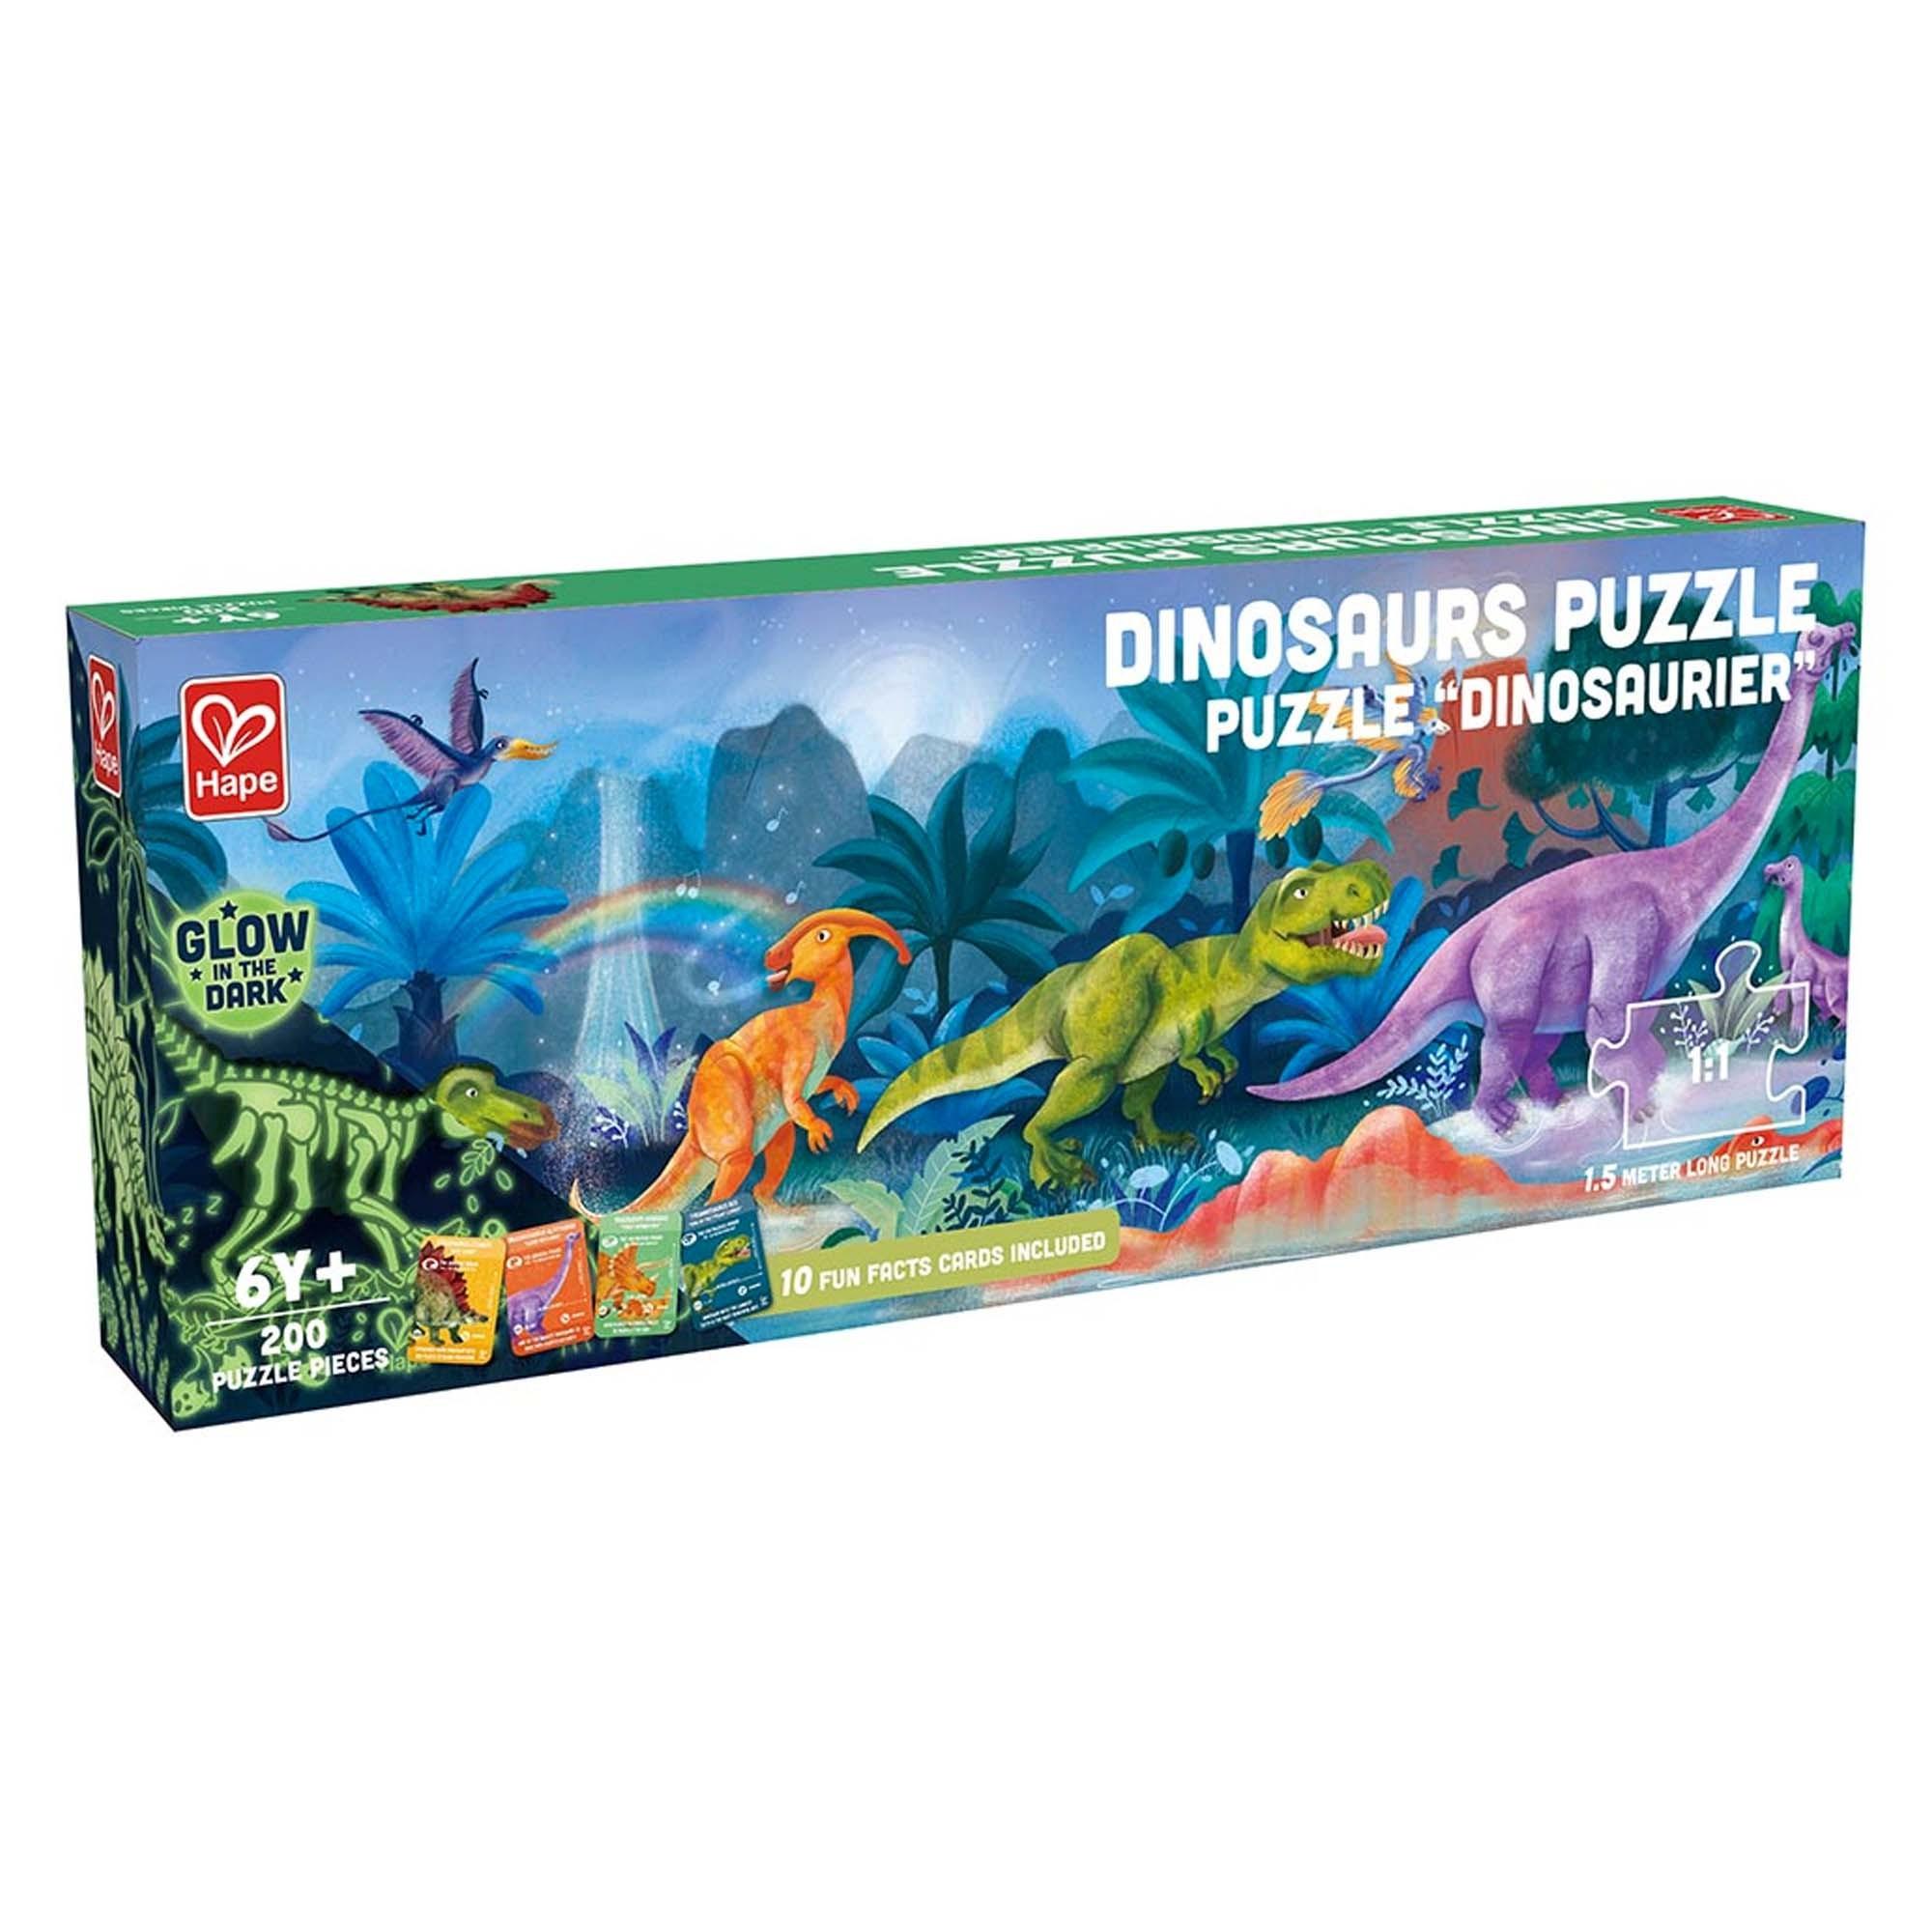 Hape - Dinosaurs Puzzle